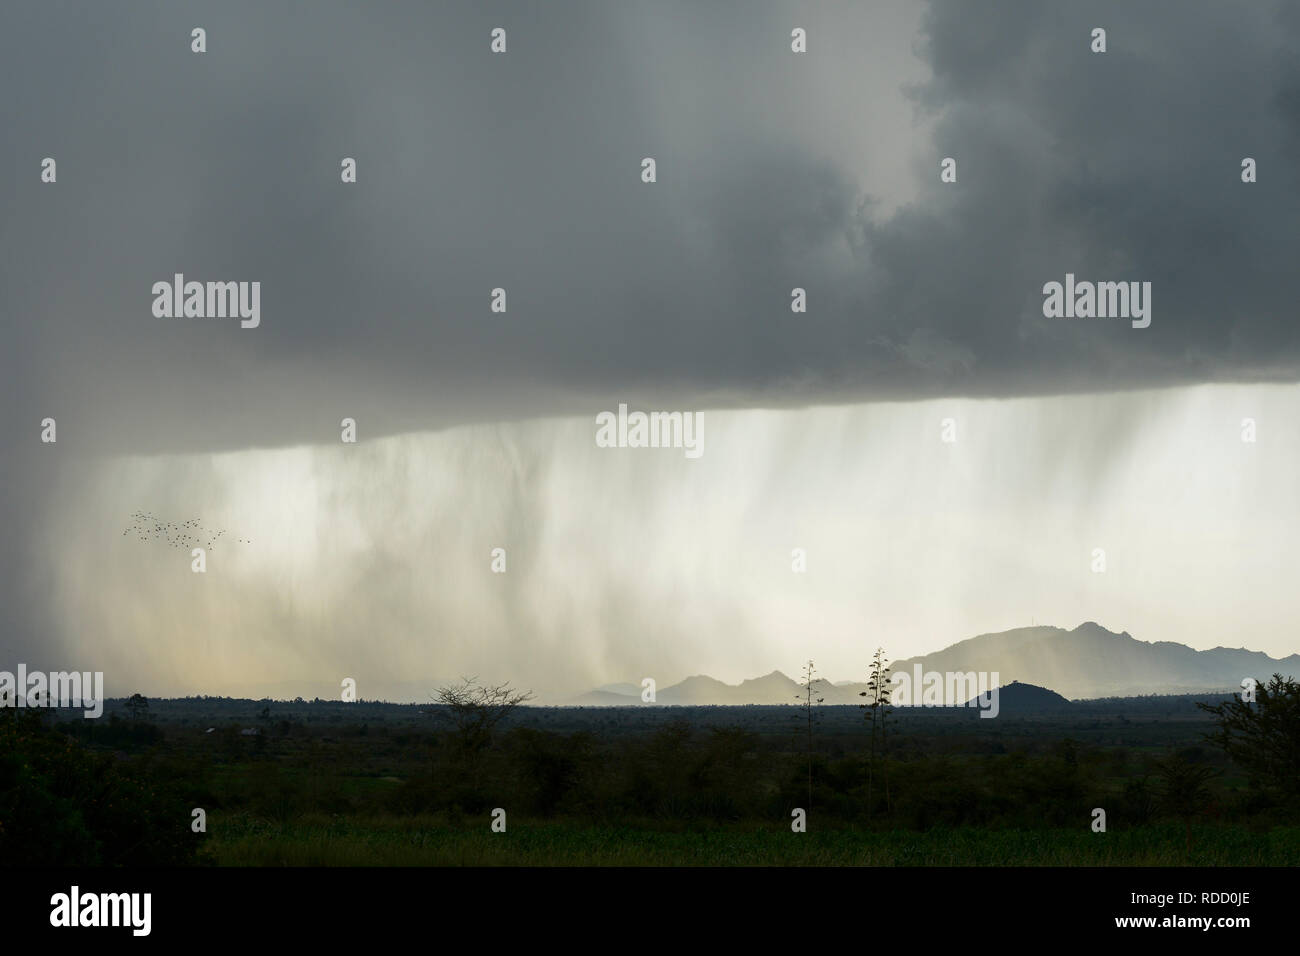 TANZANIA, Tarime, raining over mountain range / TANSANIA, Tarime, Regenwolken ueber Bergmassiv Stock Photo